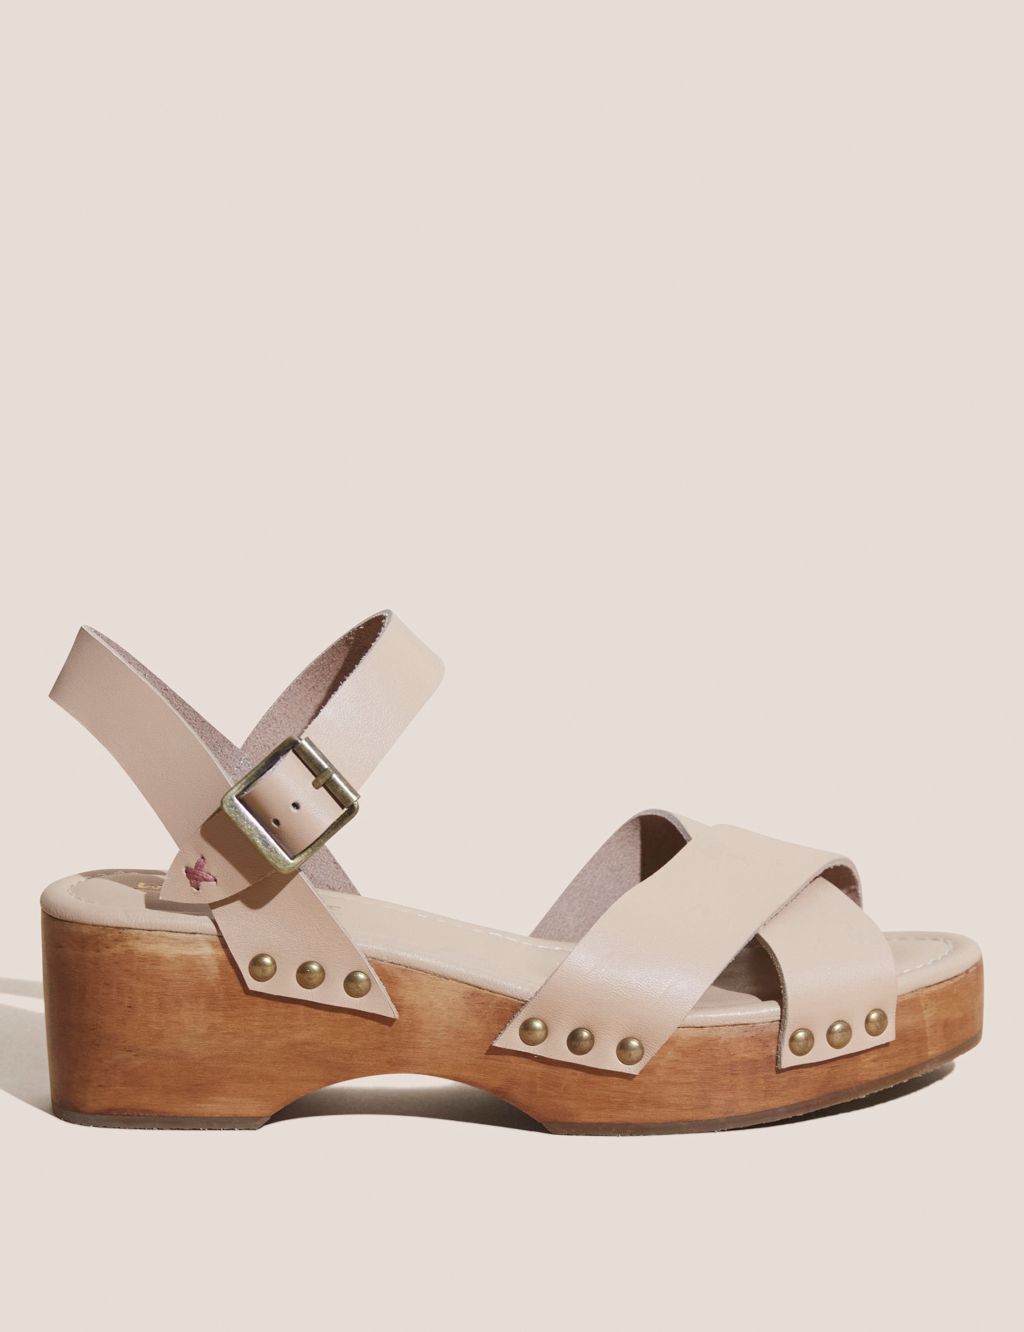 Leather Clog Sandals | White Stuff |